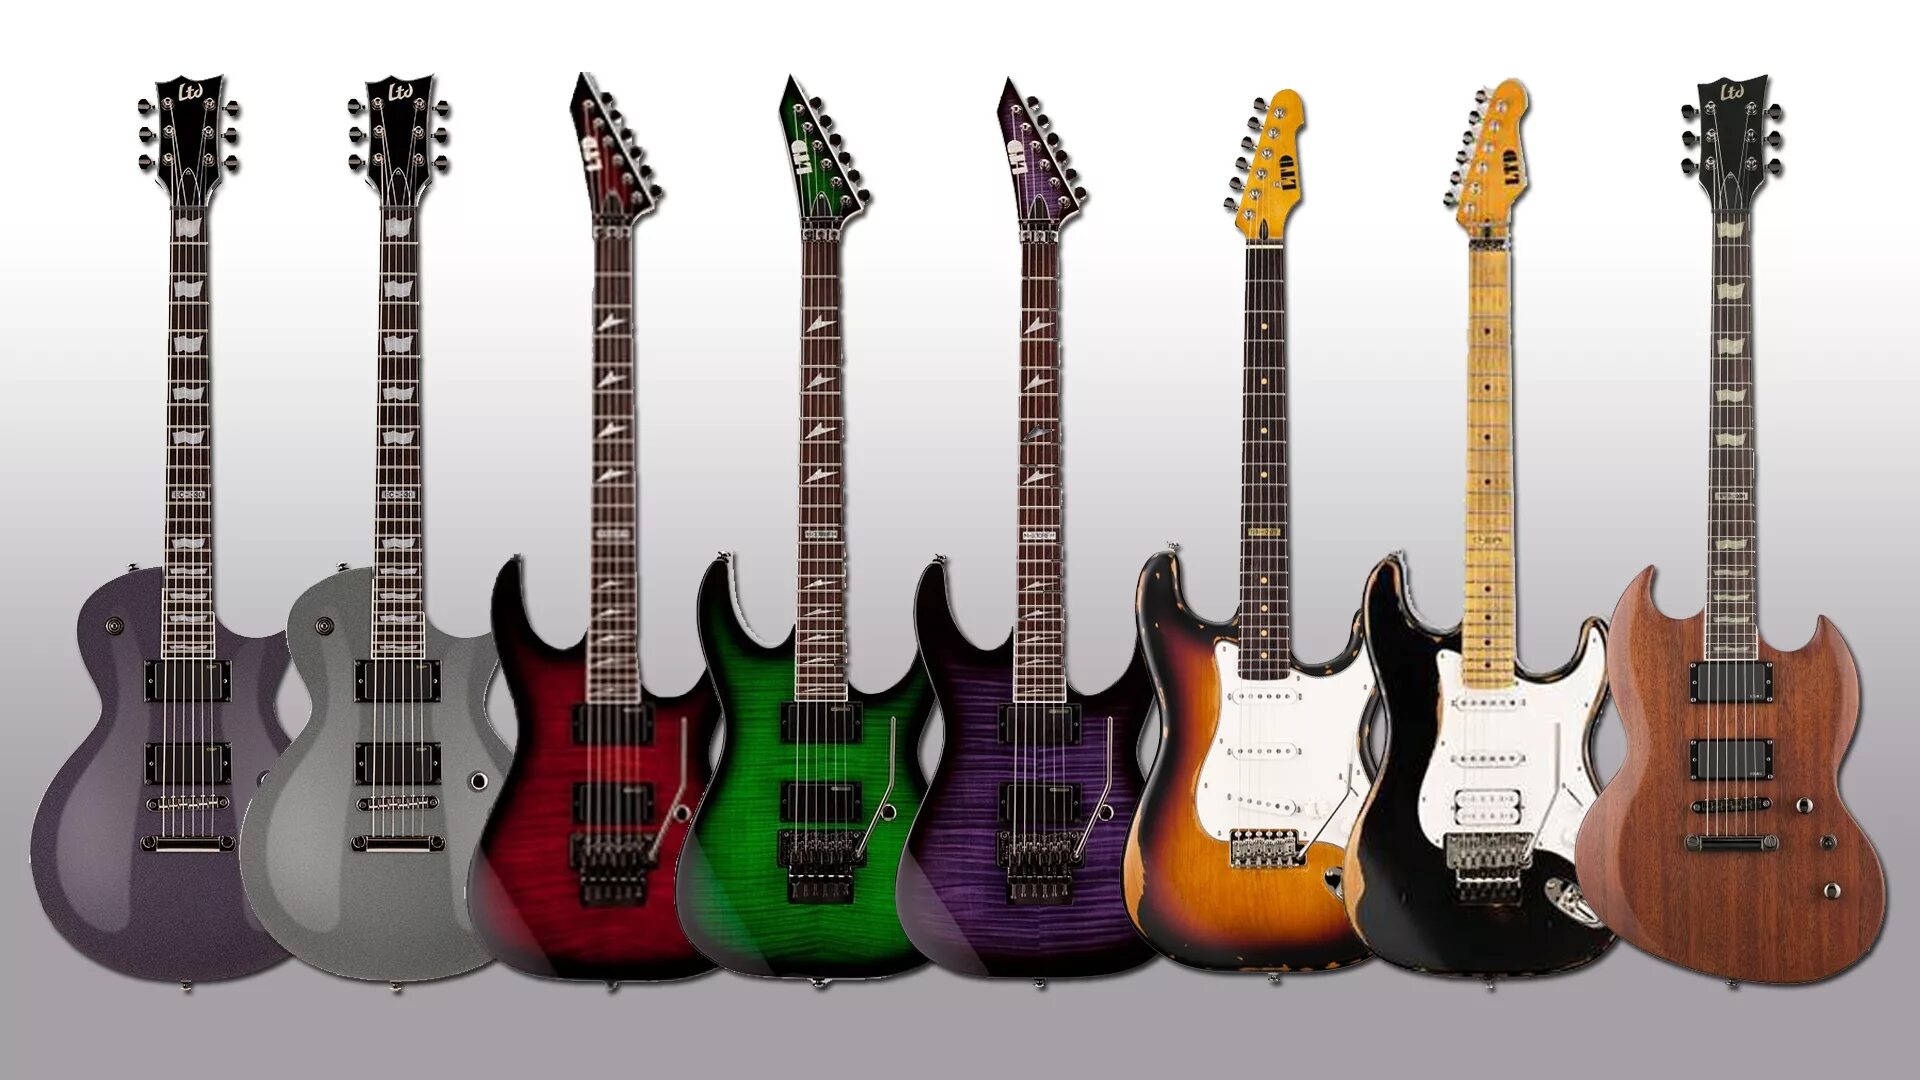 Гитара Ltd MHB-400. Бас гитара Suhr. Gibson суперстрат. Электрогитара мензура 30.